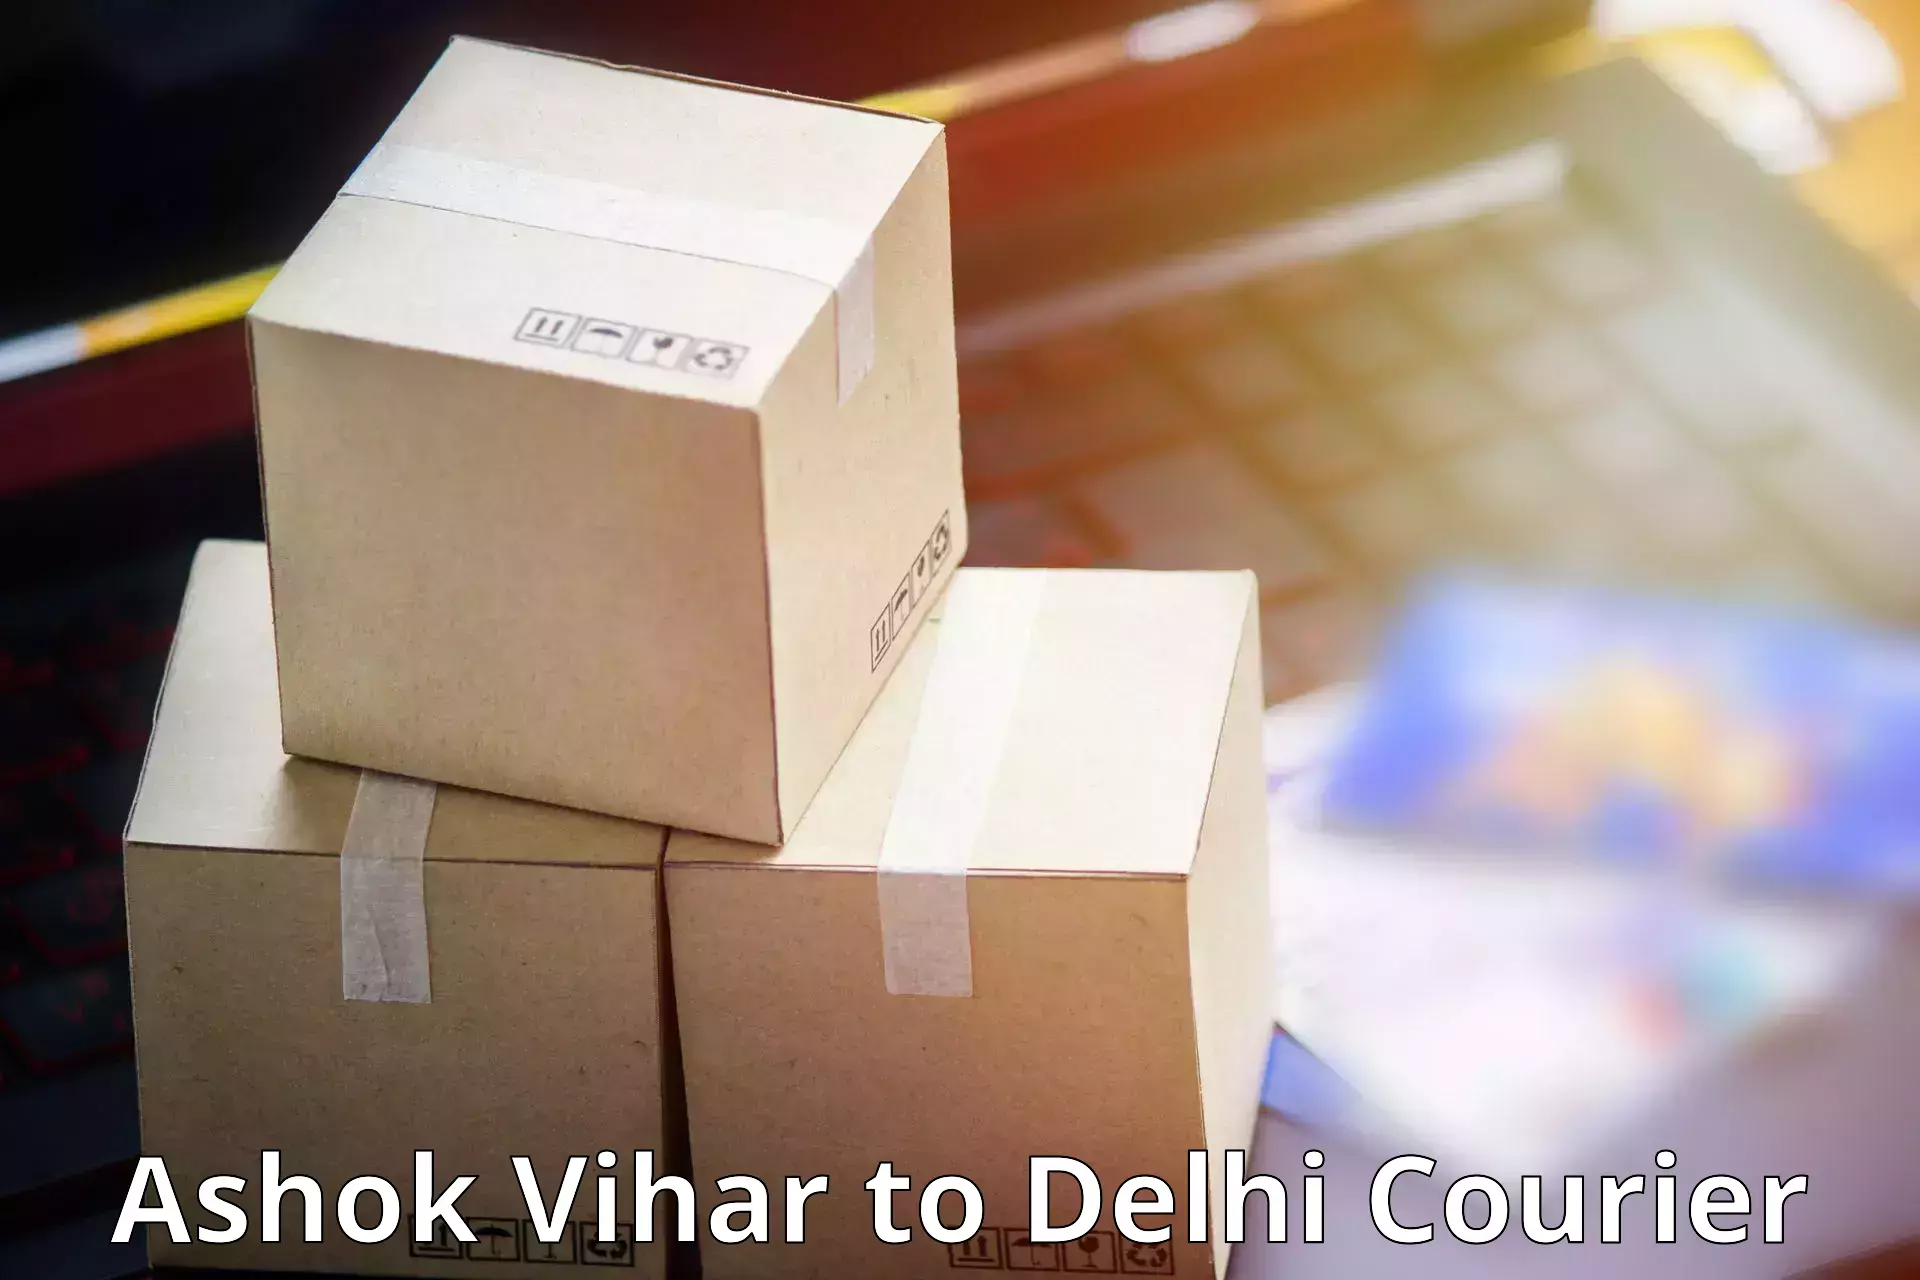 Efficient parcel service Ashok Vihar to Naraina Industrial Estate